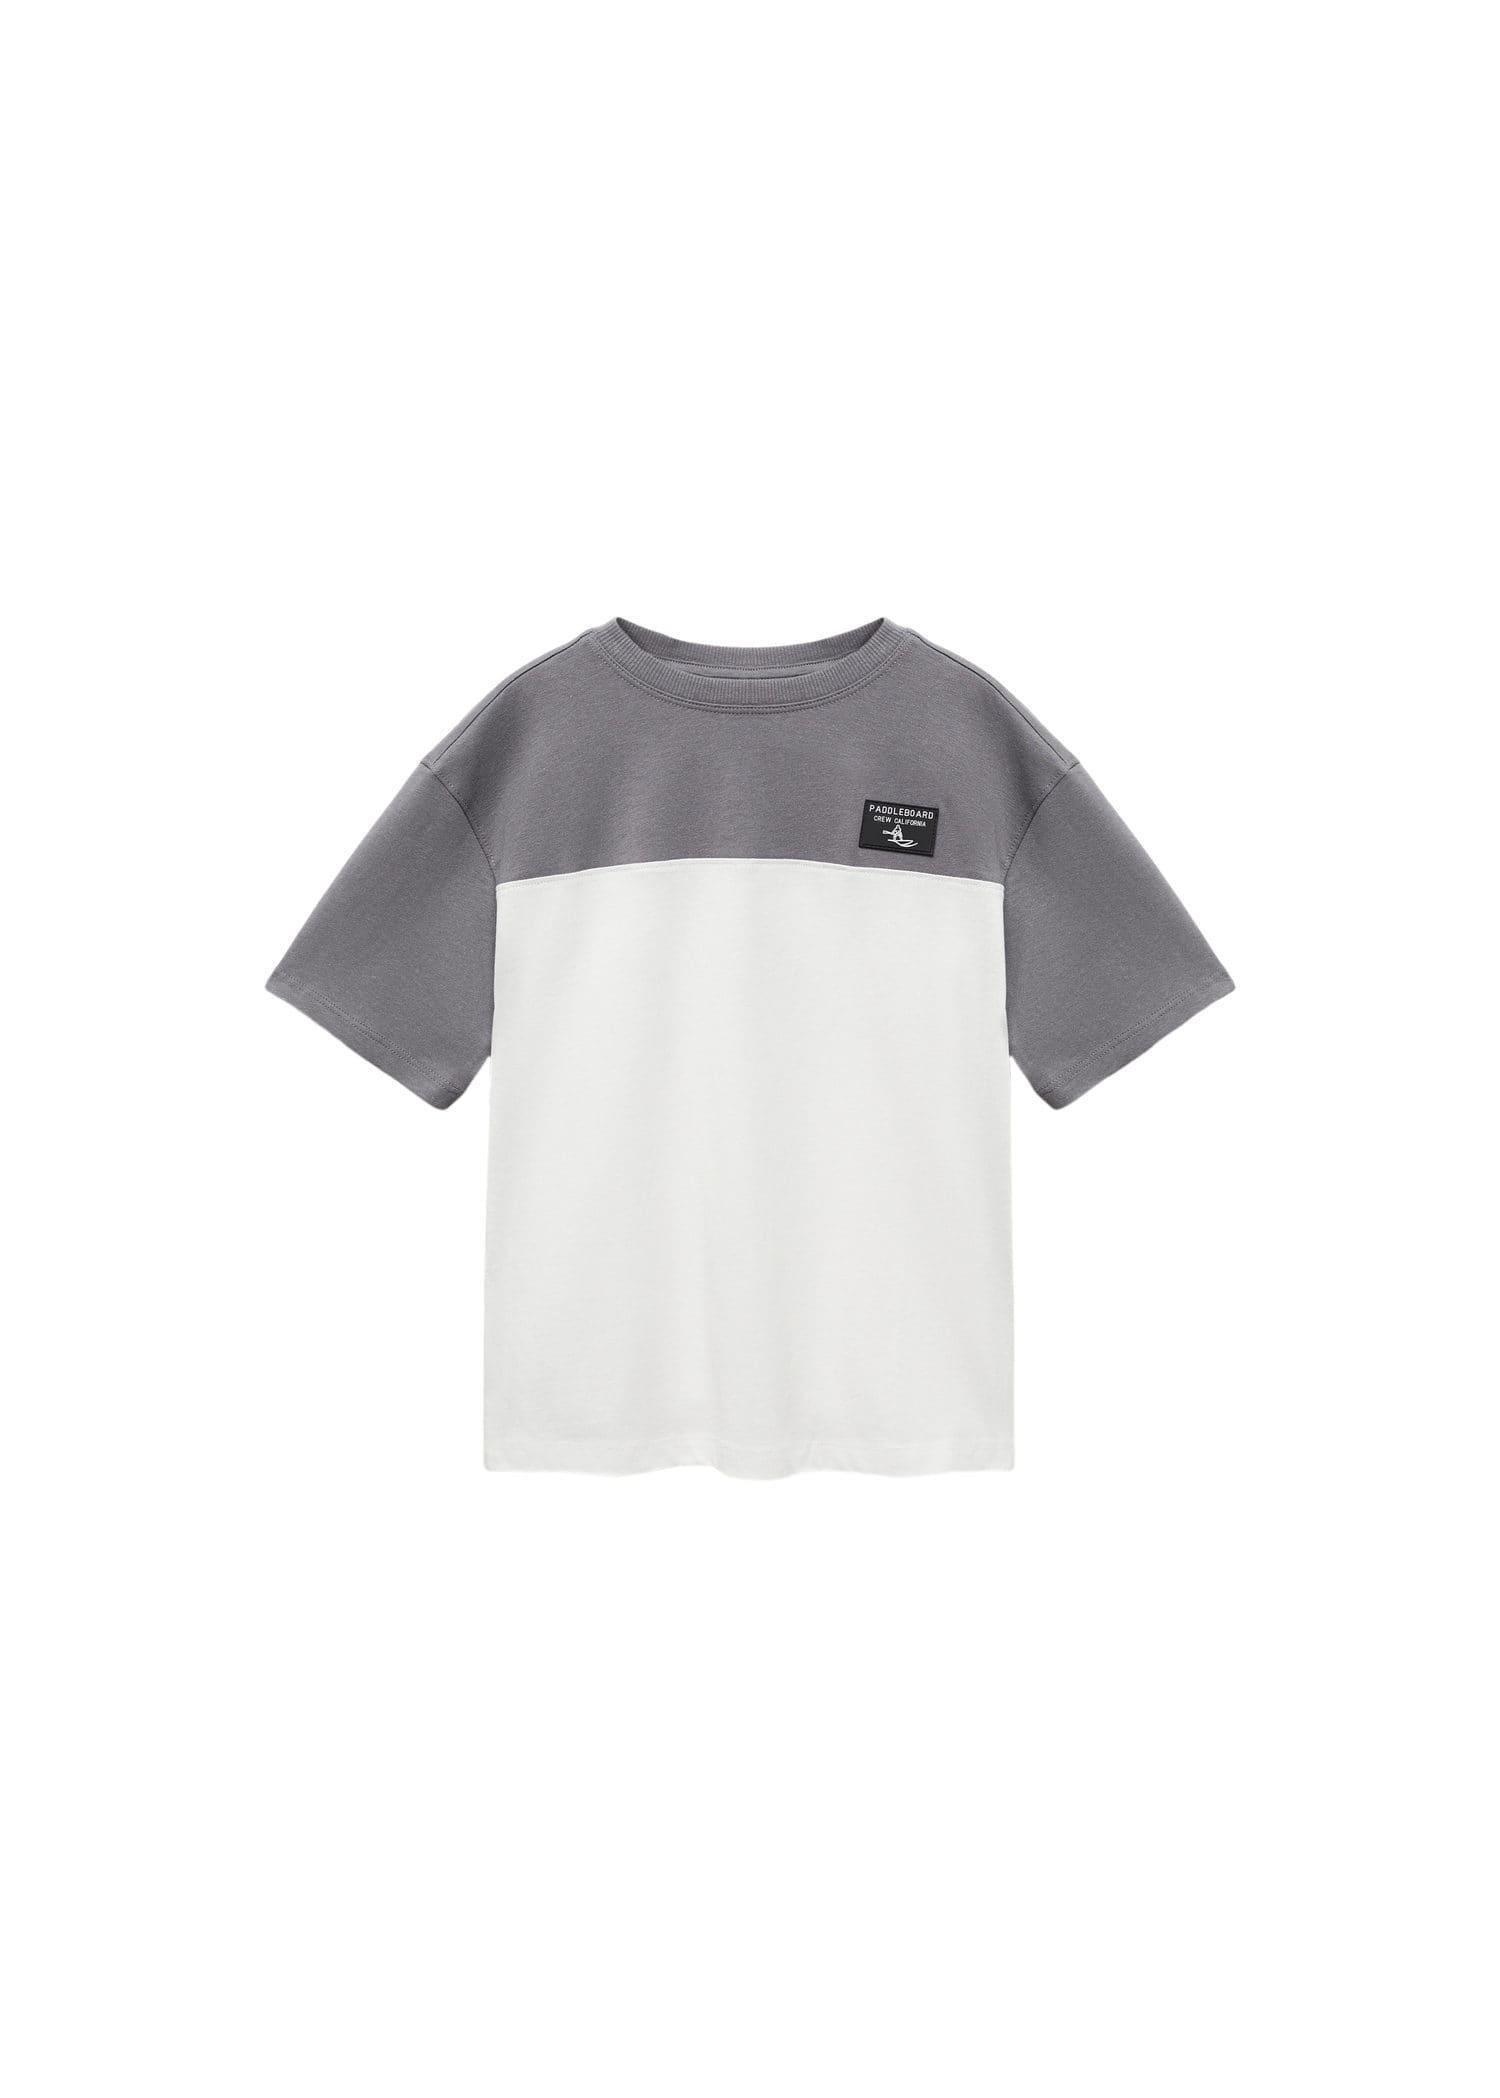 Mango - Grey Two-Tone Surf T-Shirt, Kids Boys